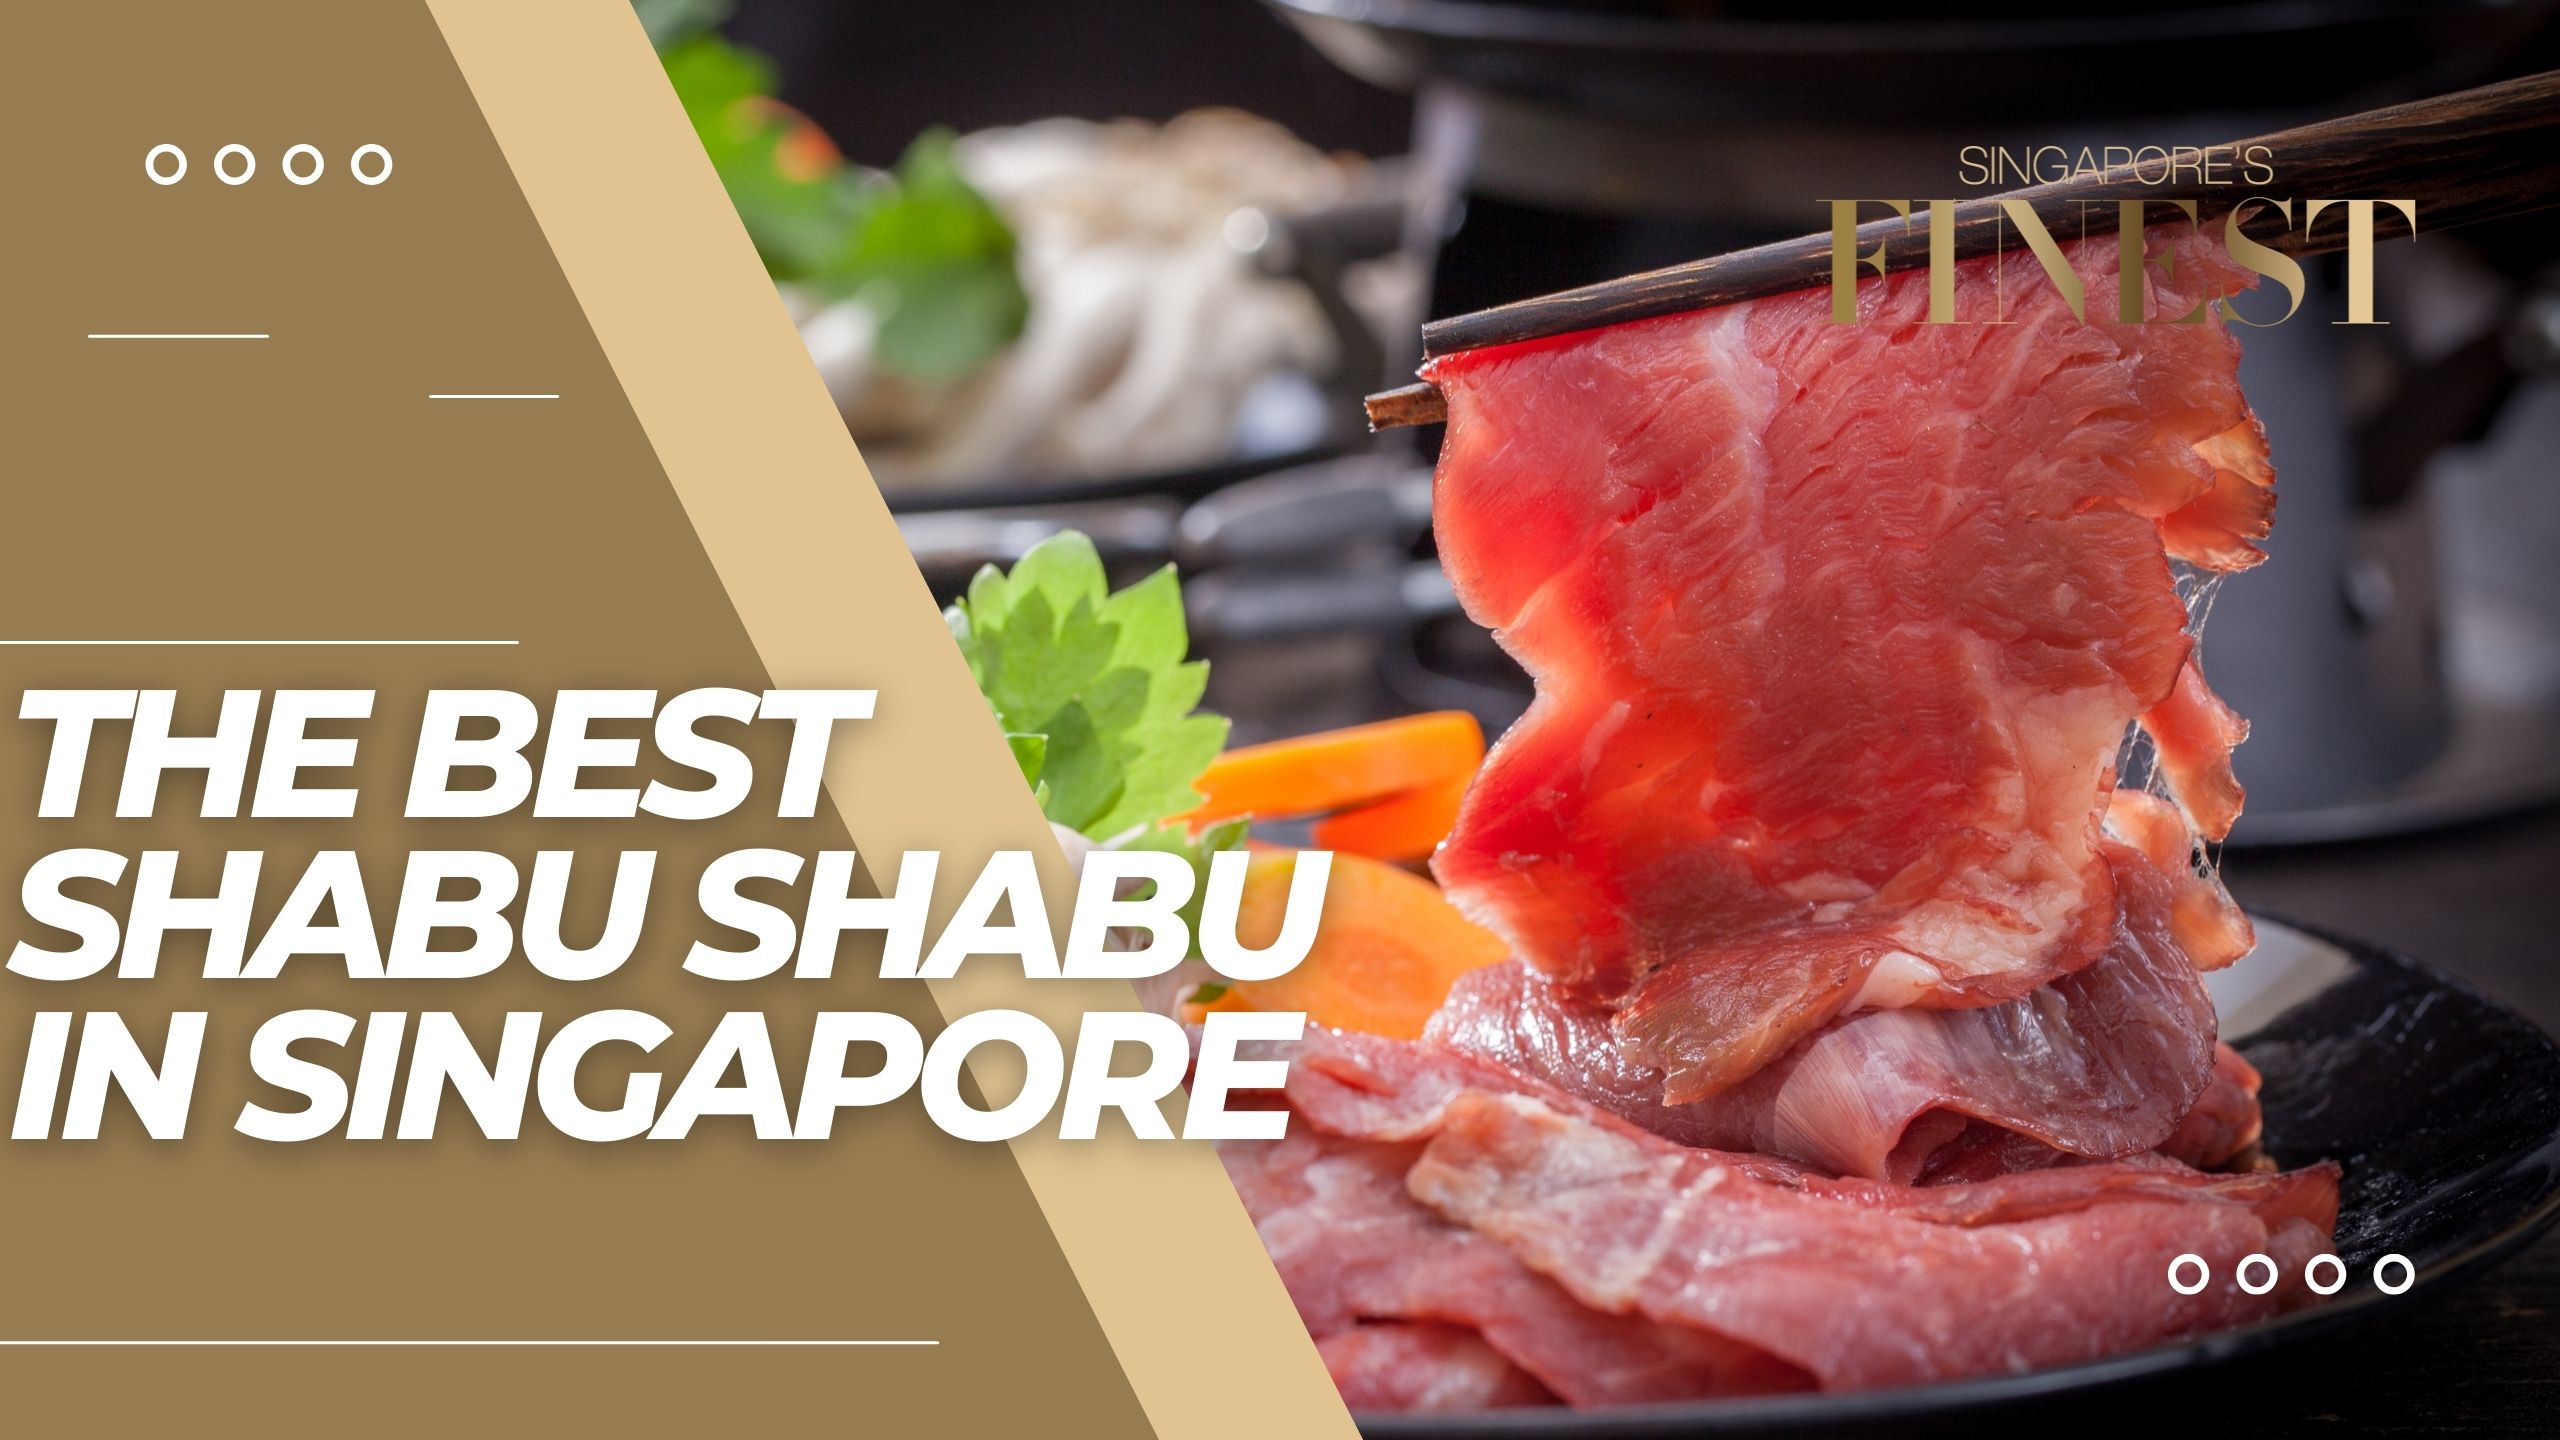 The Finest Shabu Shabu Restaurants in Singapore